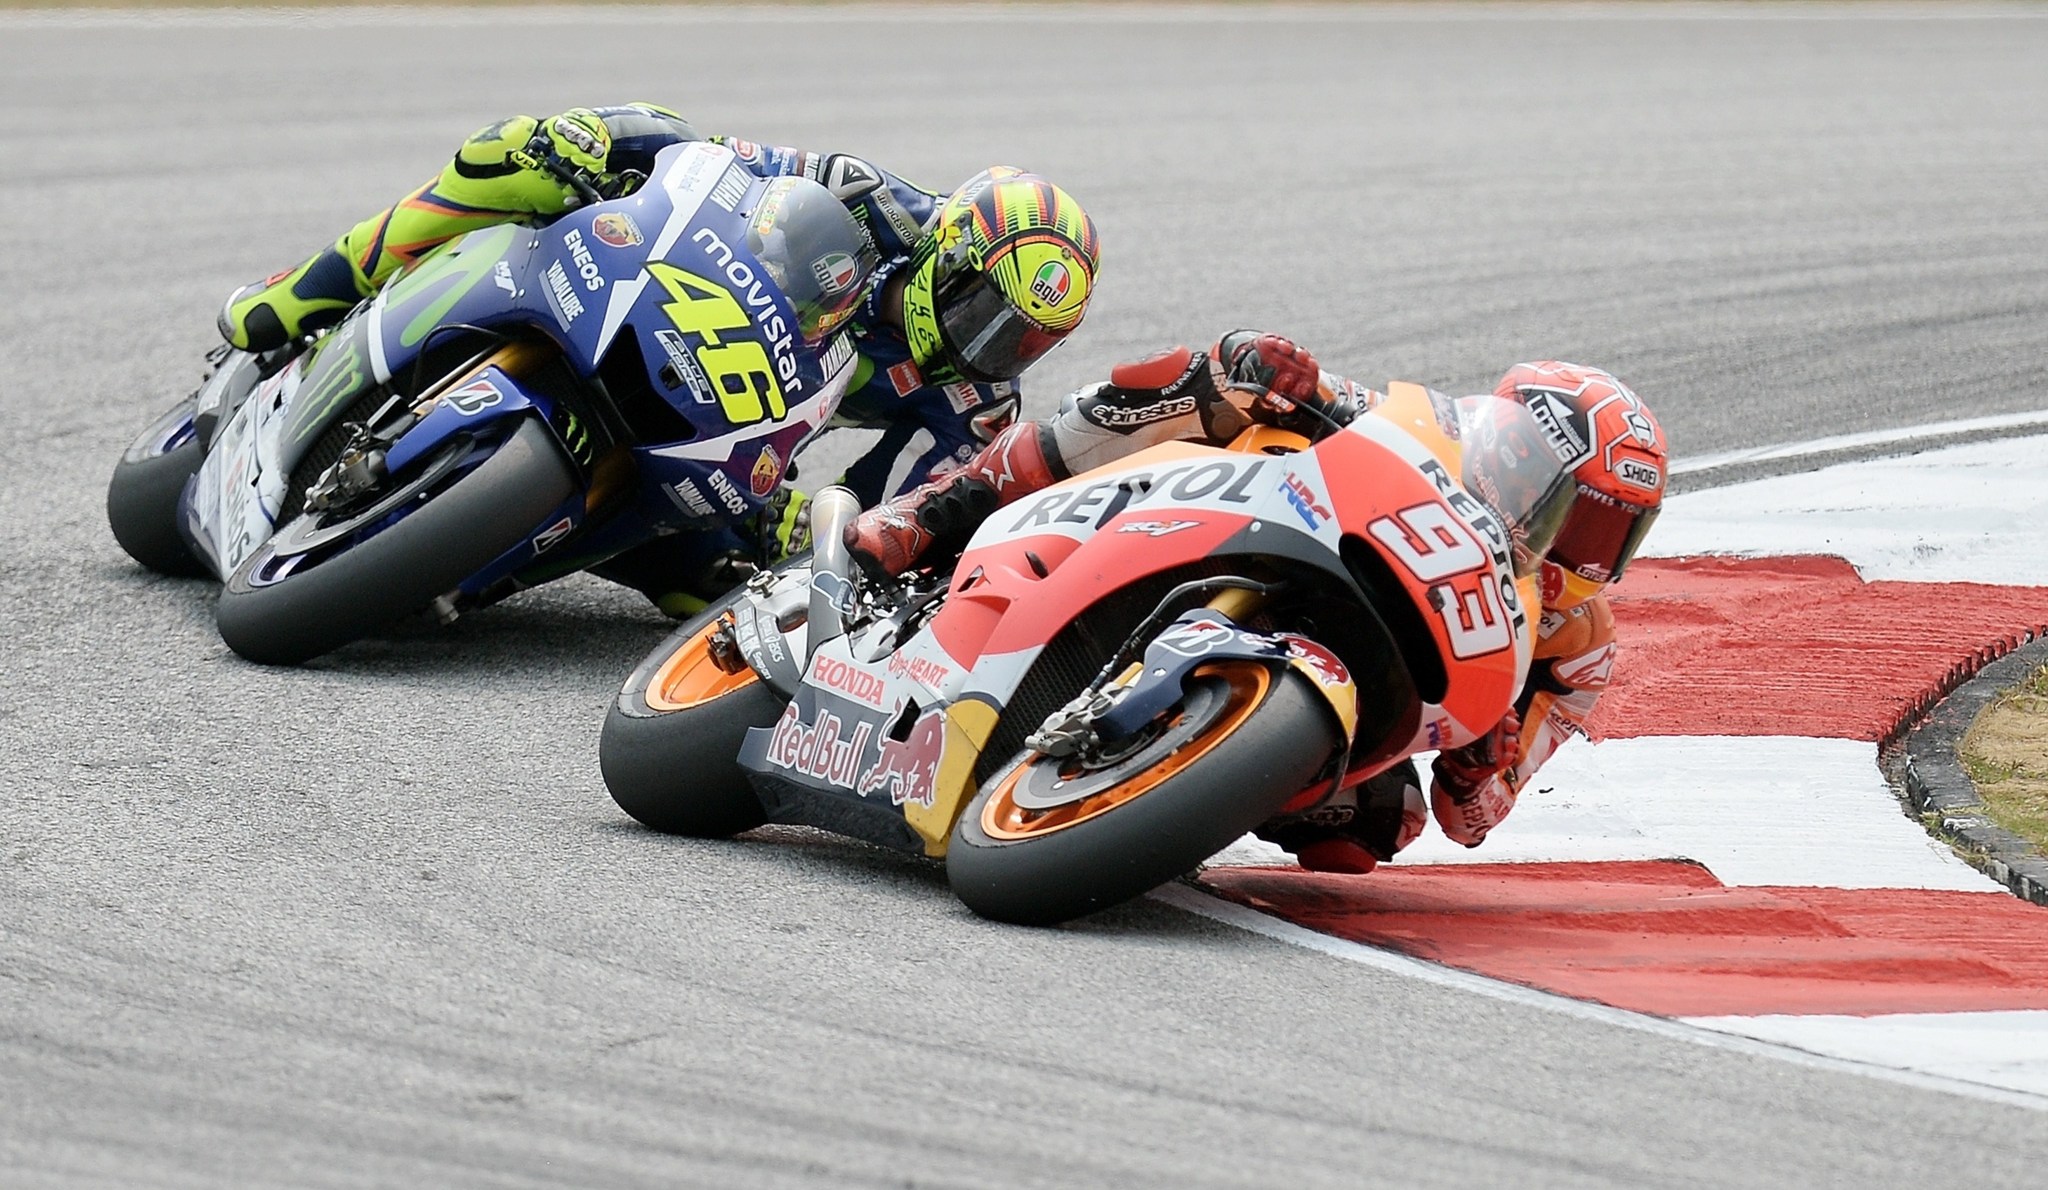 La carrera de la ruptura entre Rossi y Mrquez